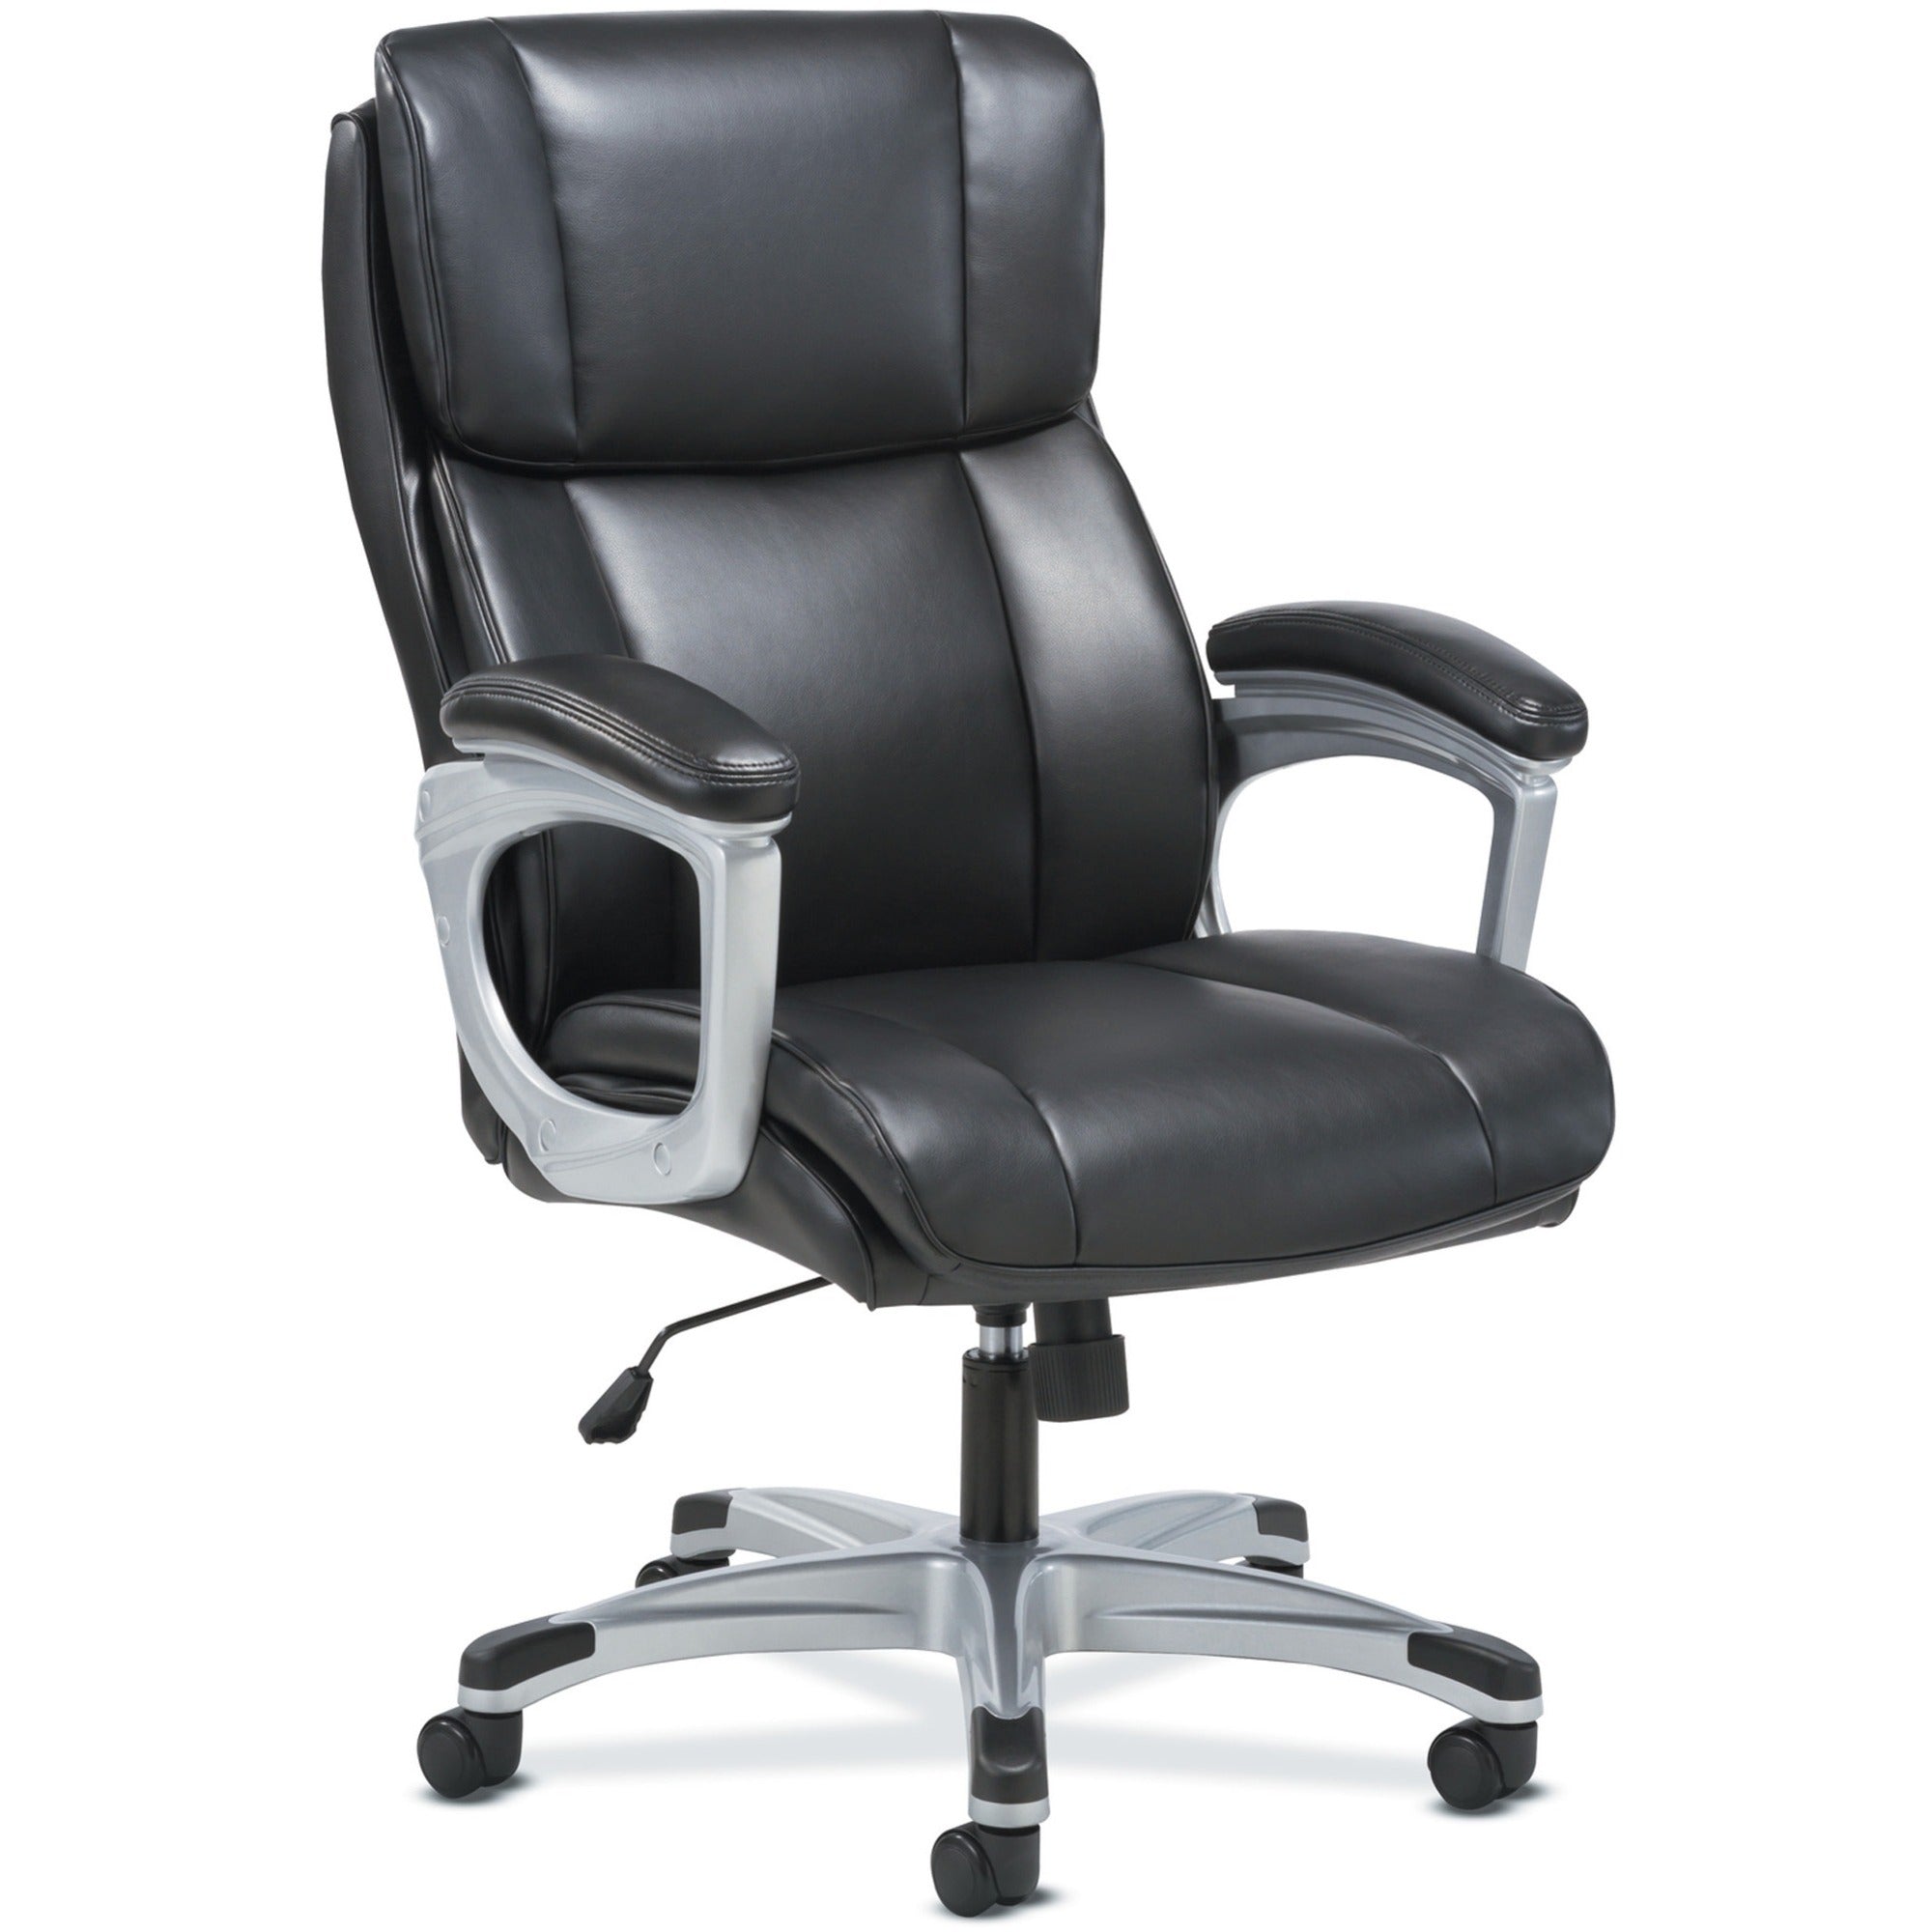 Sadie 3-Fifteen Executive Leather Chair - Black Plush, Bonded Leather Seat - Black Plush, Bonded Leather Back - High Back - 5-star Base - 1 Each - 1